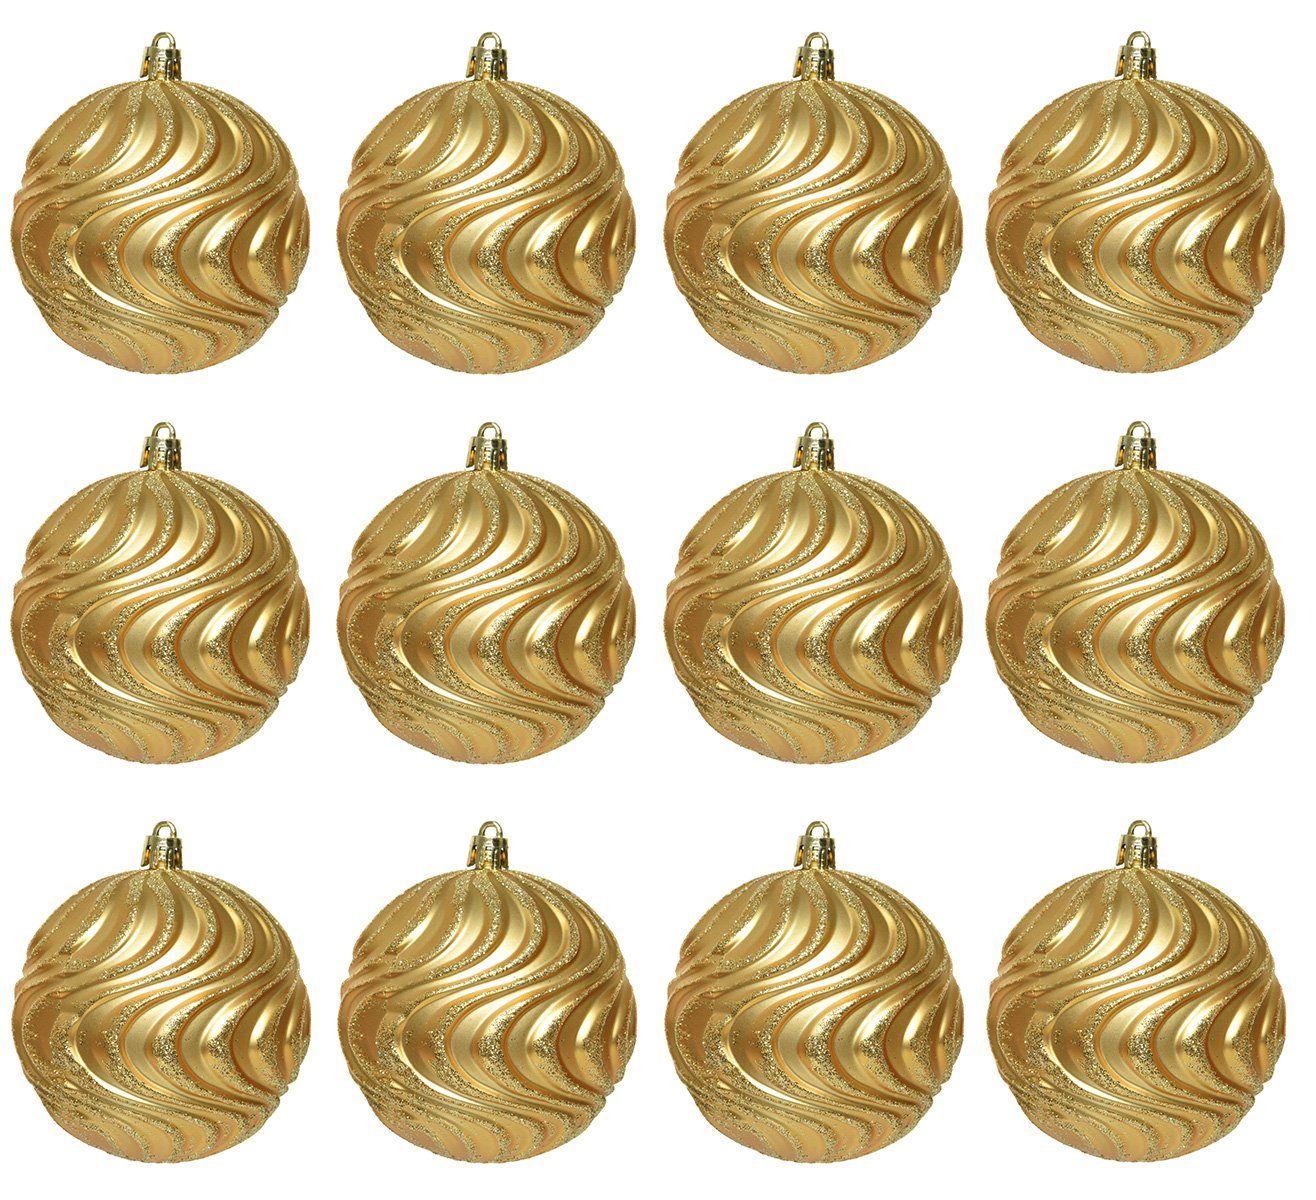 Decoris season decorations Christbaumschmuck, Weihnachtskugeln Kunststoff 8cm Wellen Ornamente 12er Set - Hellgold